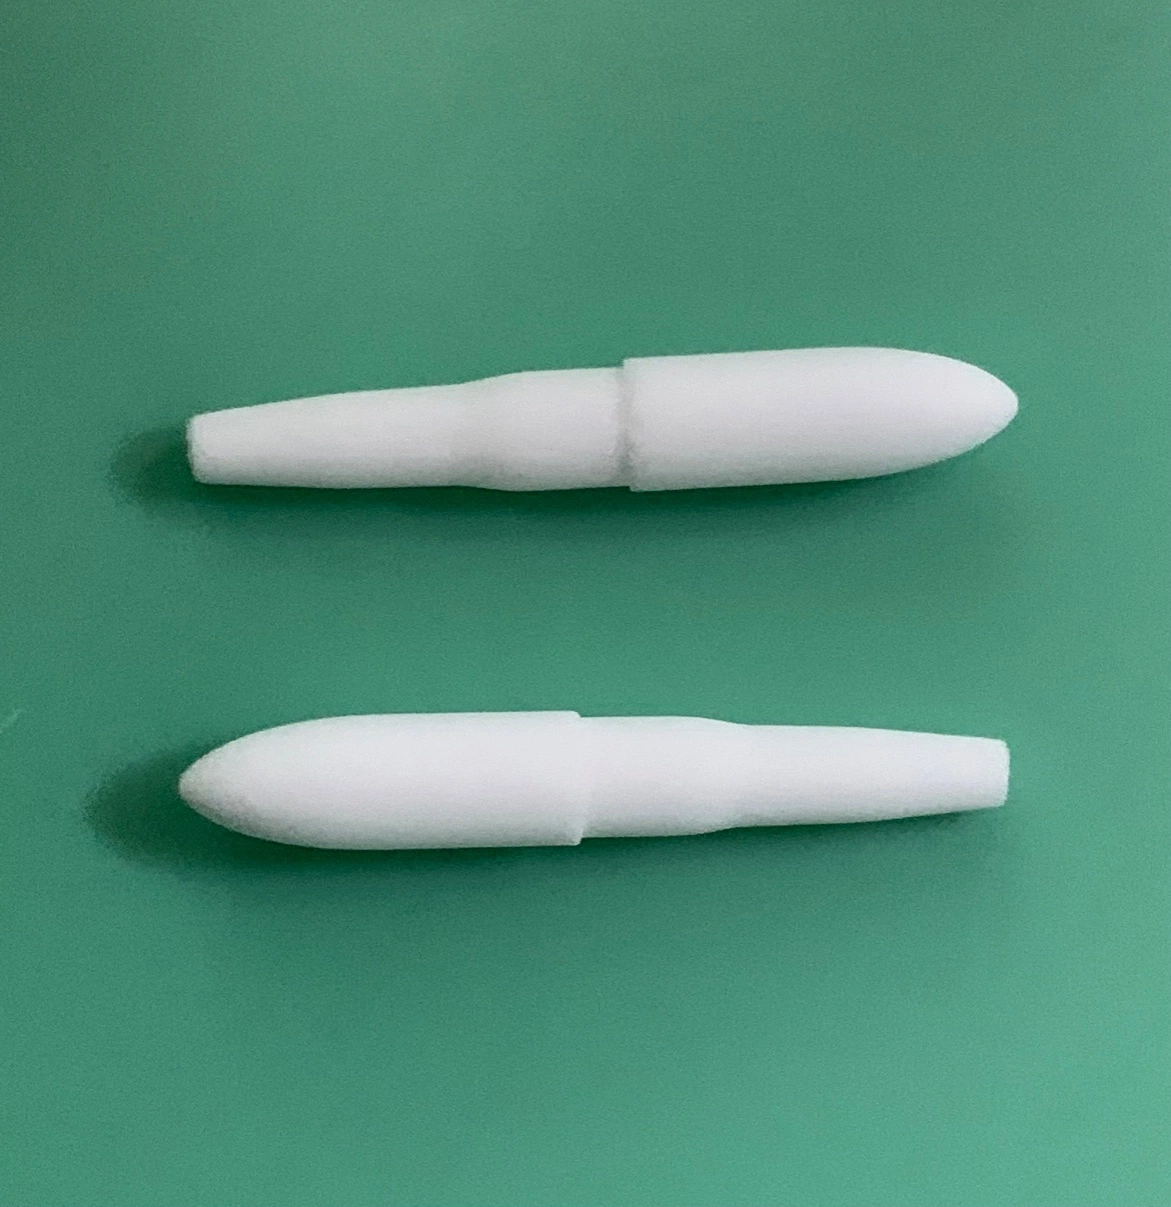 Highlighter Nibs (Bullet-shaped) Pen for Office Supply